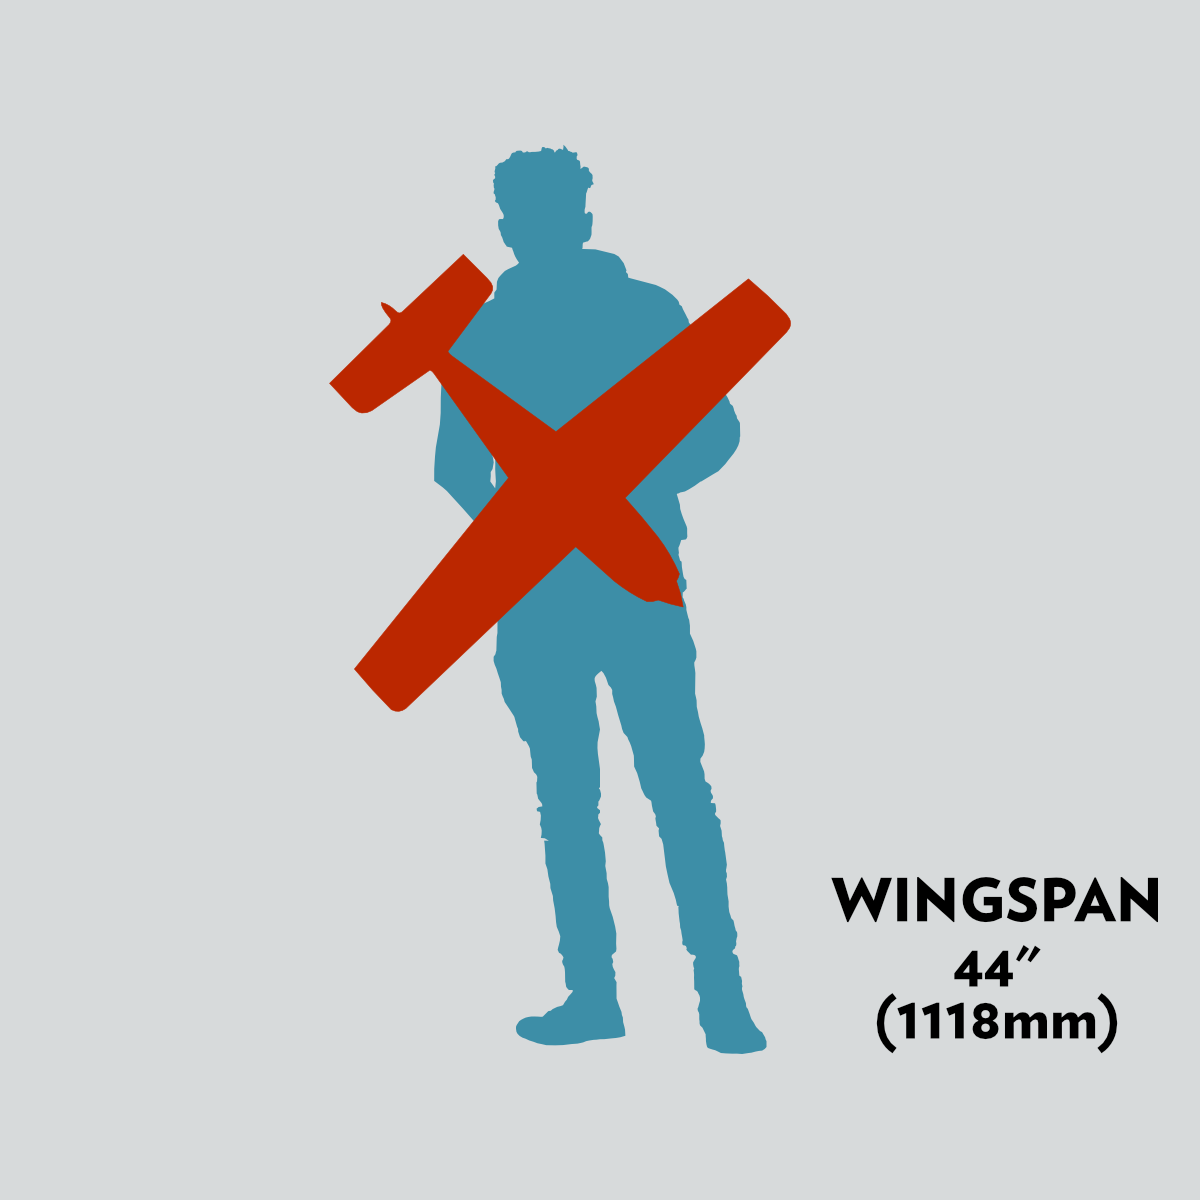 44" (1118mm) Wingspan